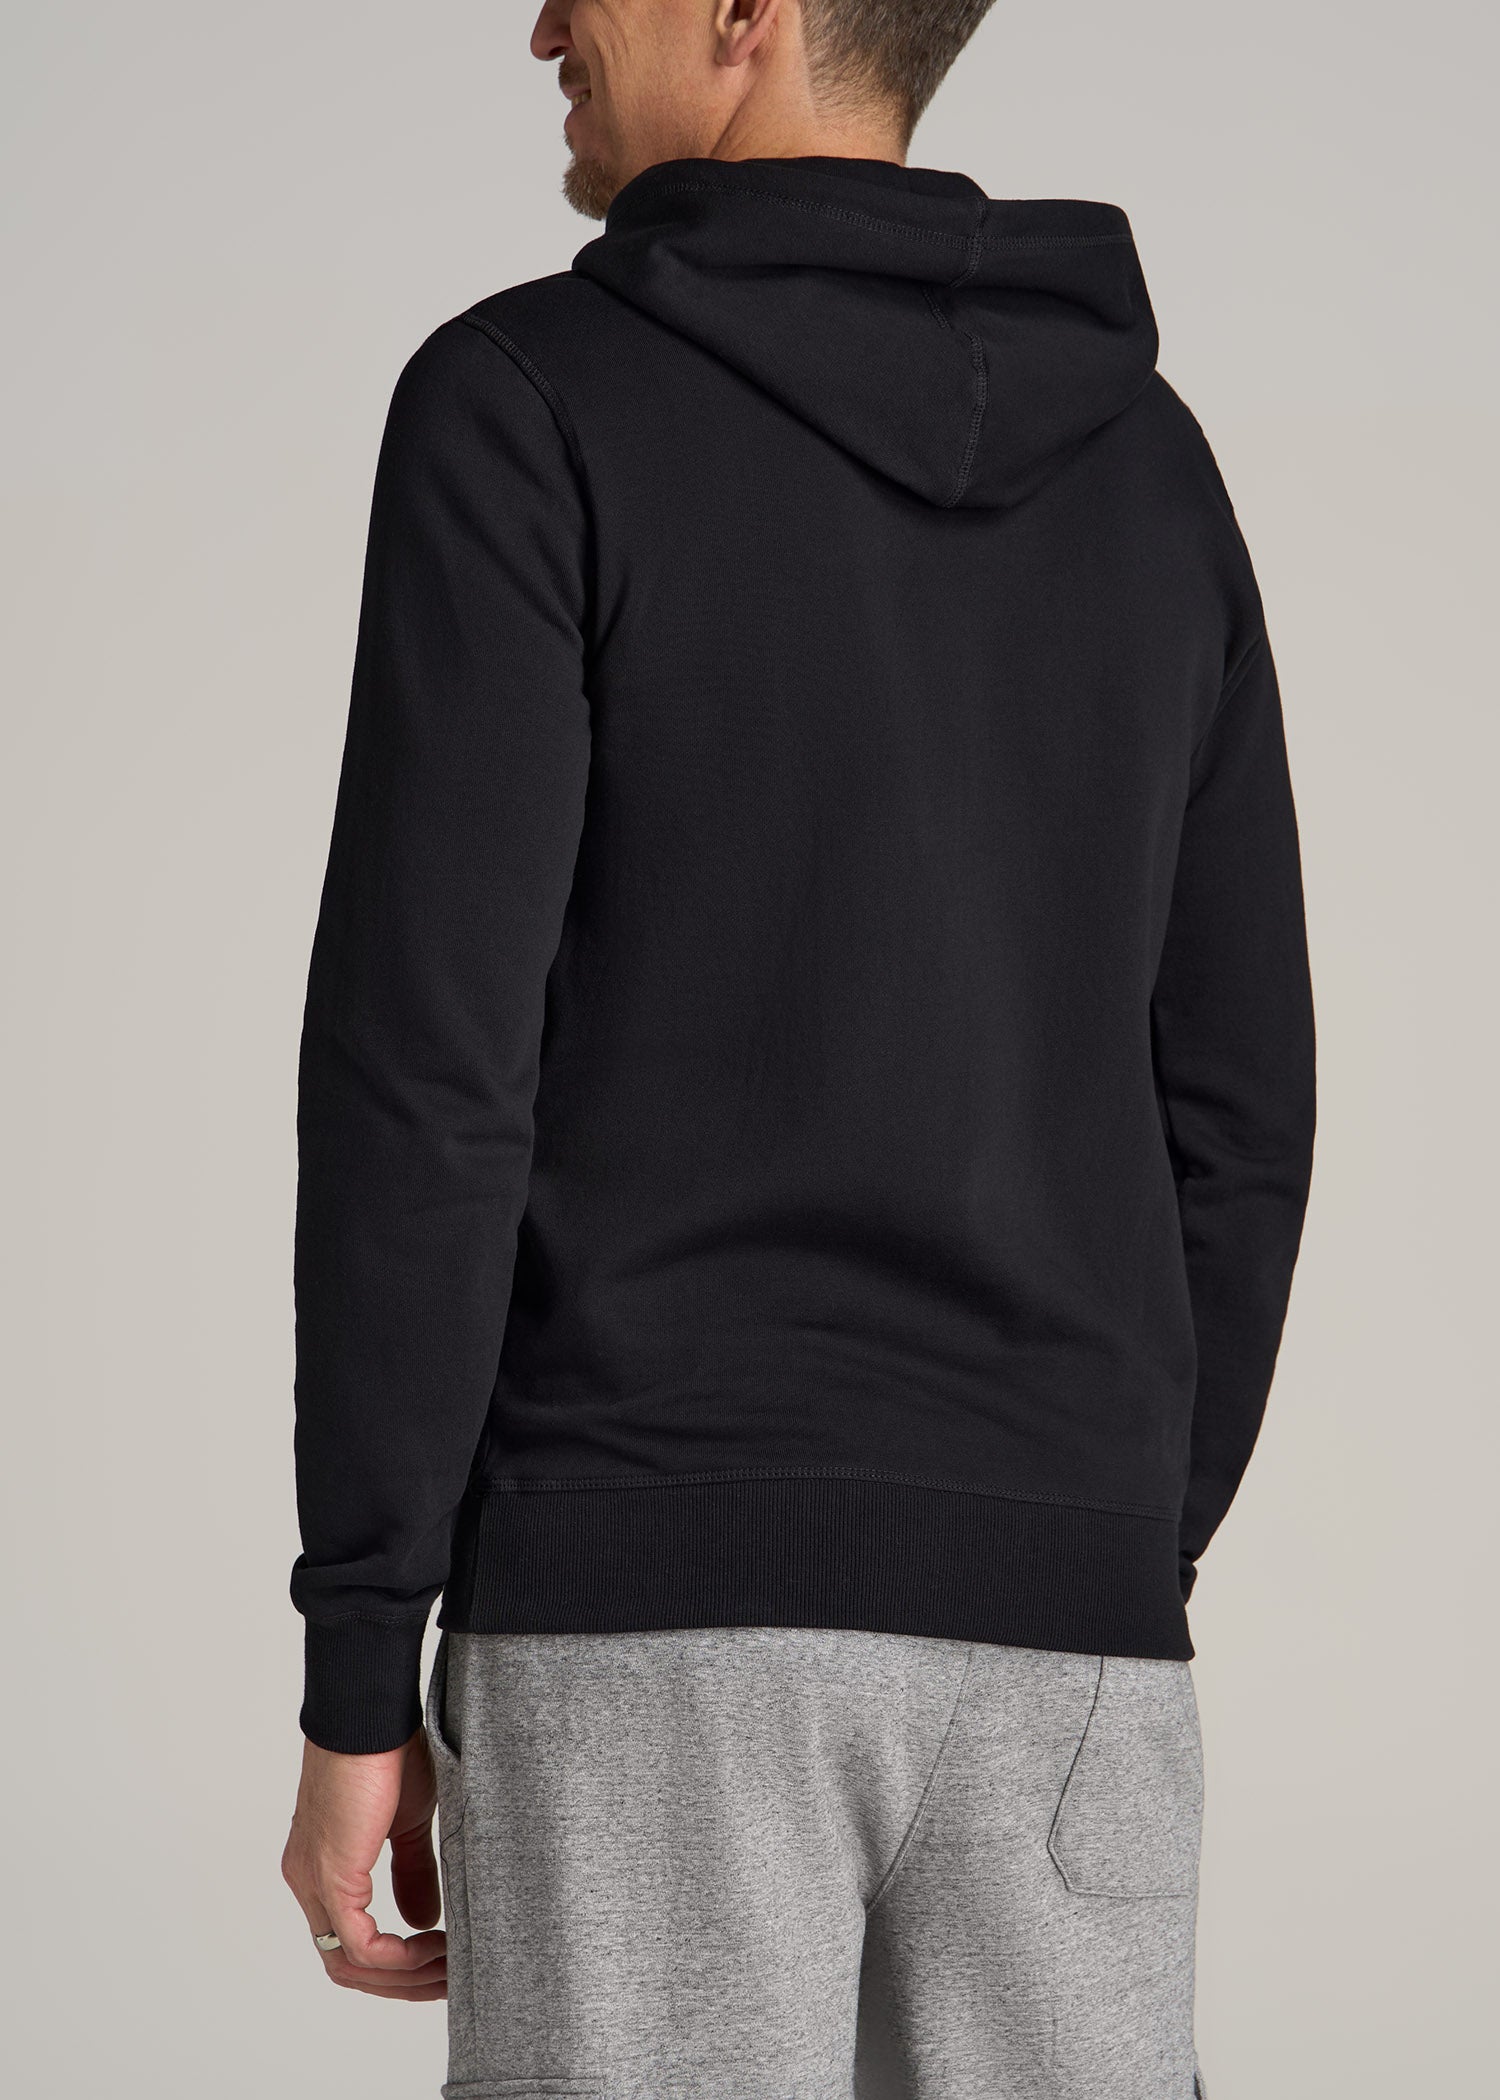 Men's Sweatshirts Pullover Hoodies Long Sleeve Drawstring Casual Active  Hooded with Pockets Sweatshirts